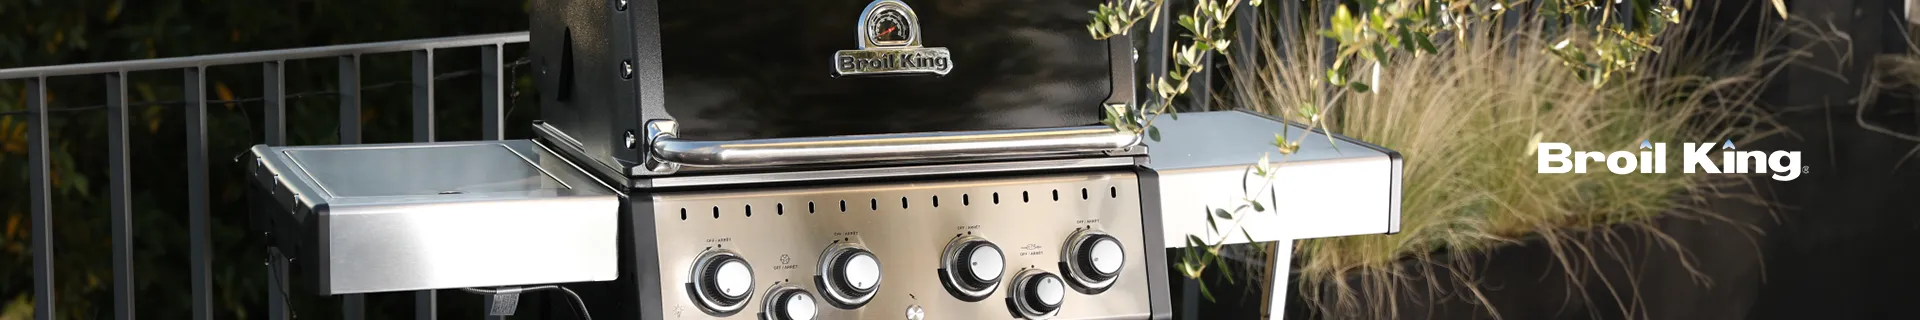 Grille gazowe Broil King